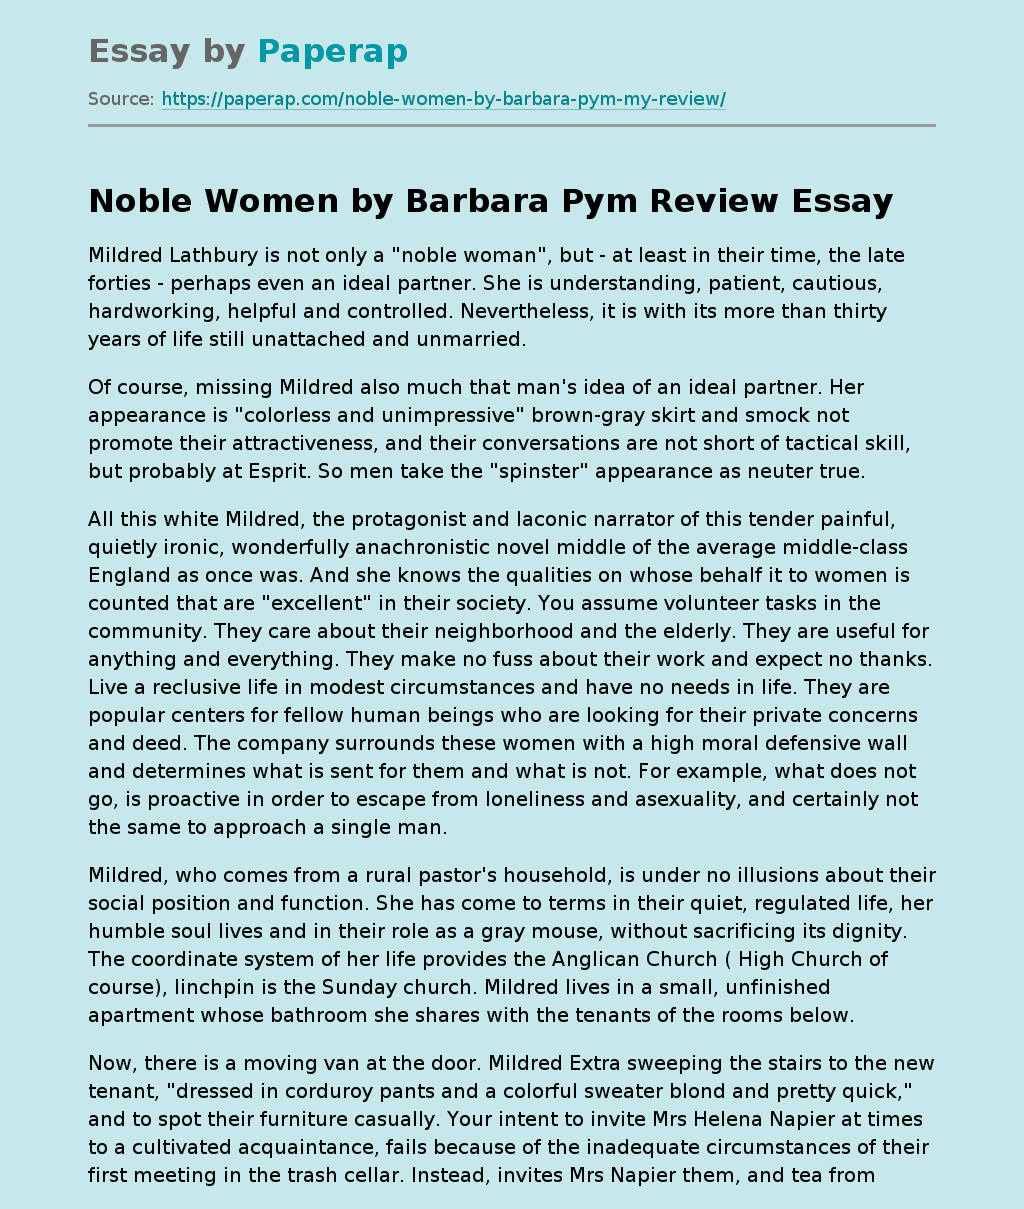 "Noble Women" by Barbara Pym